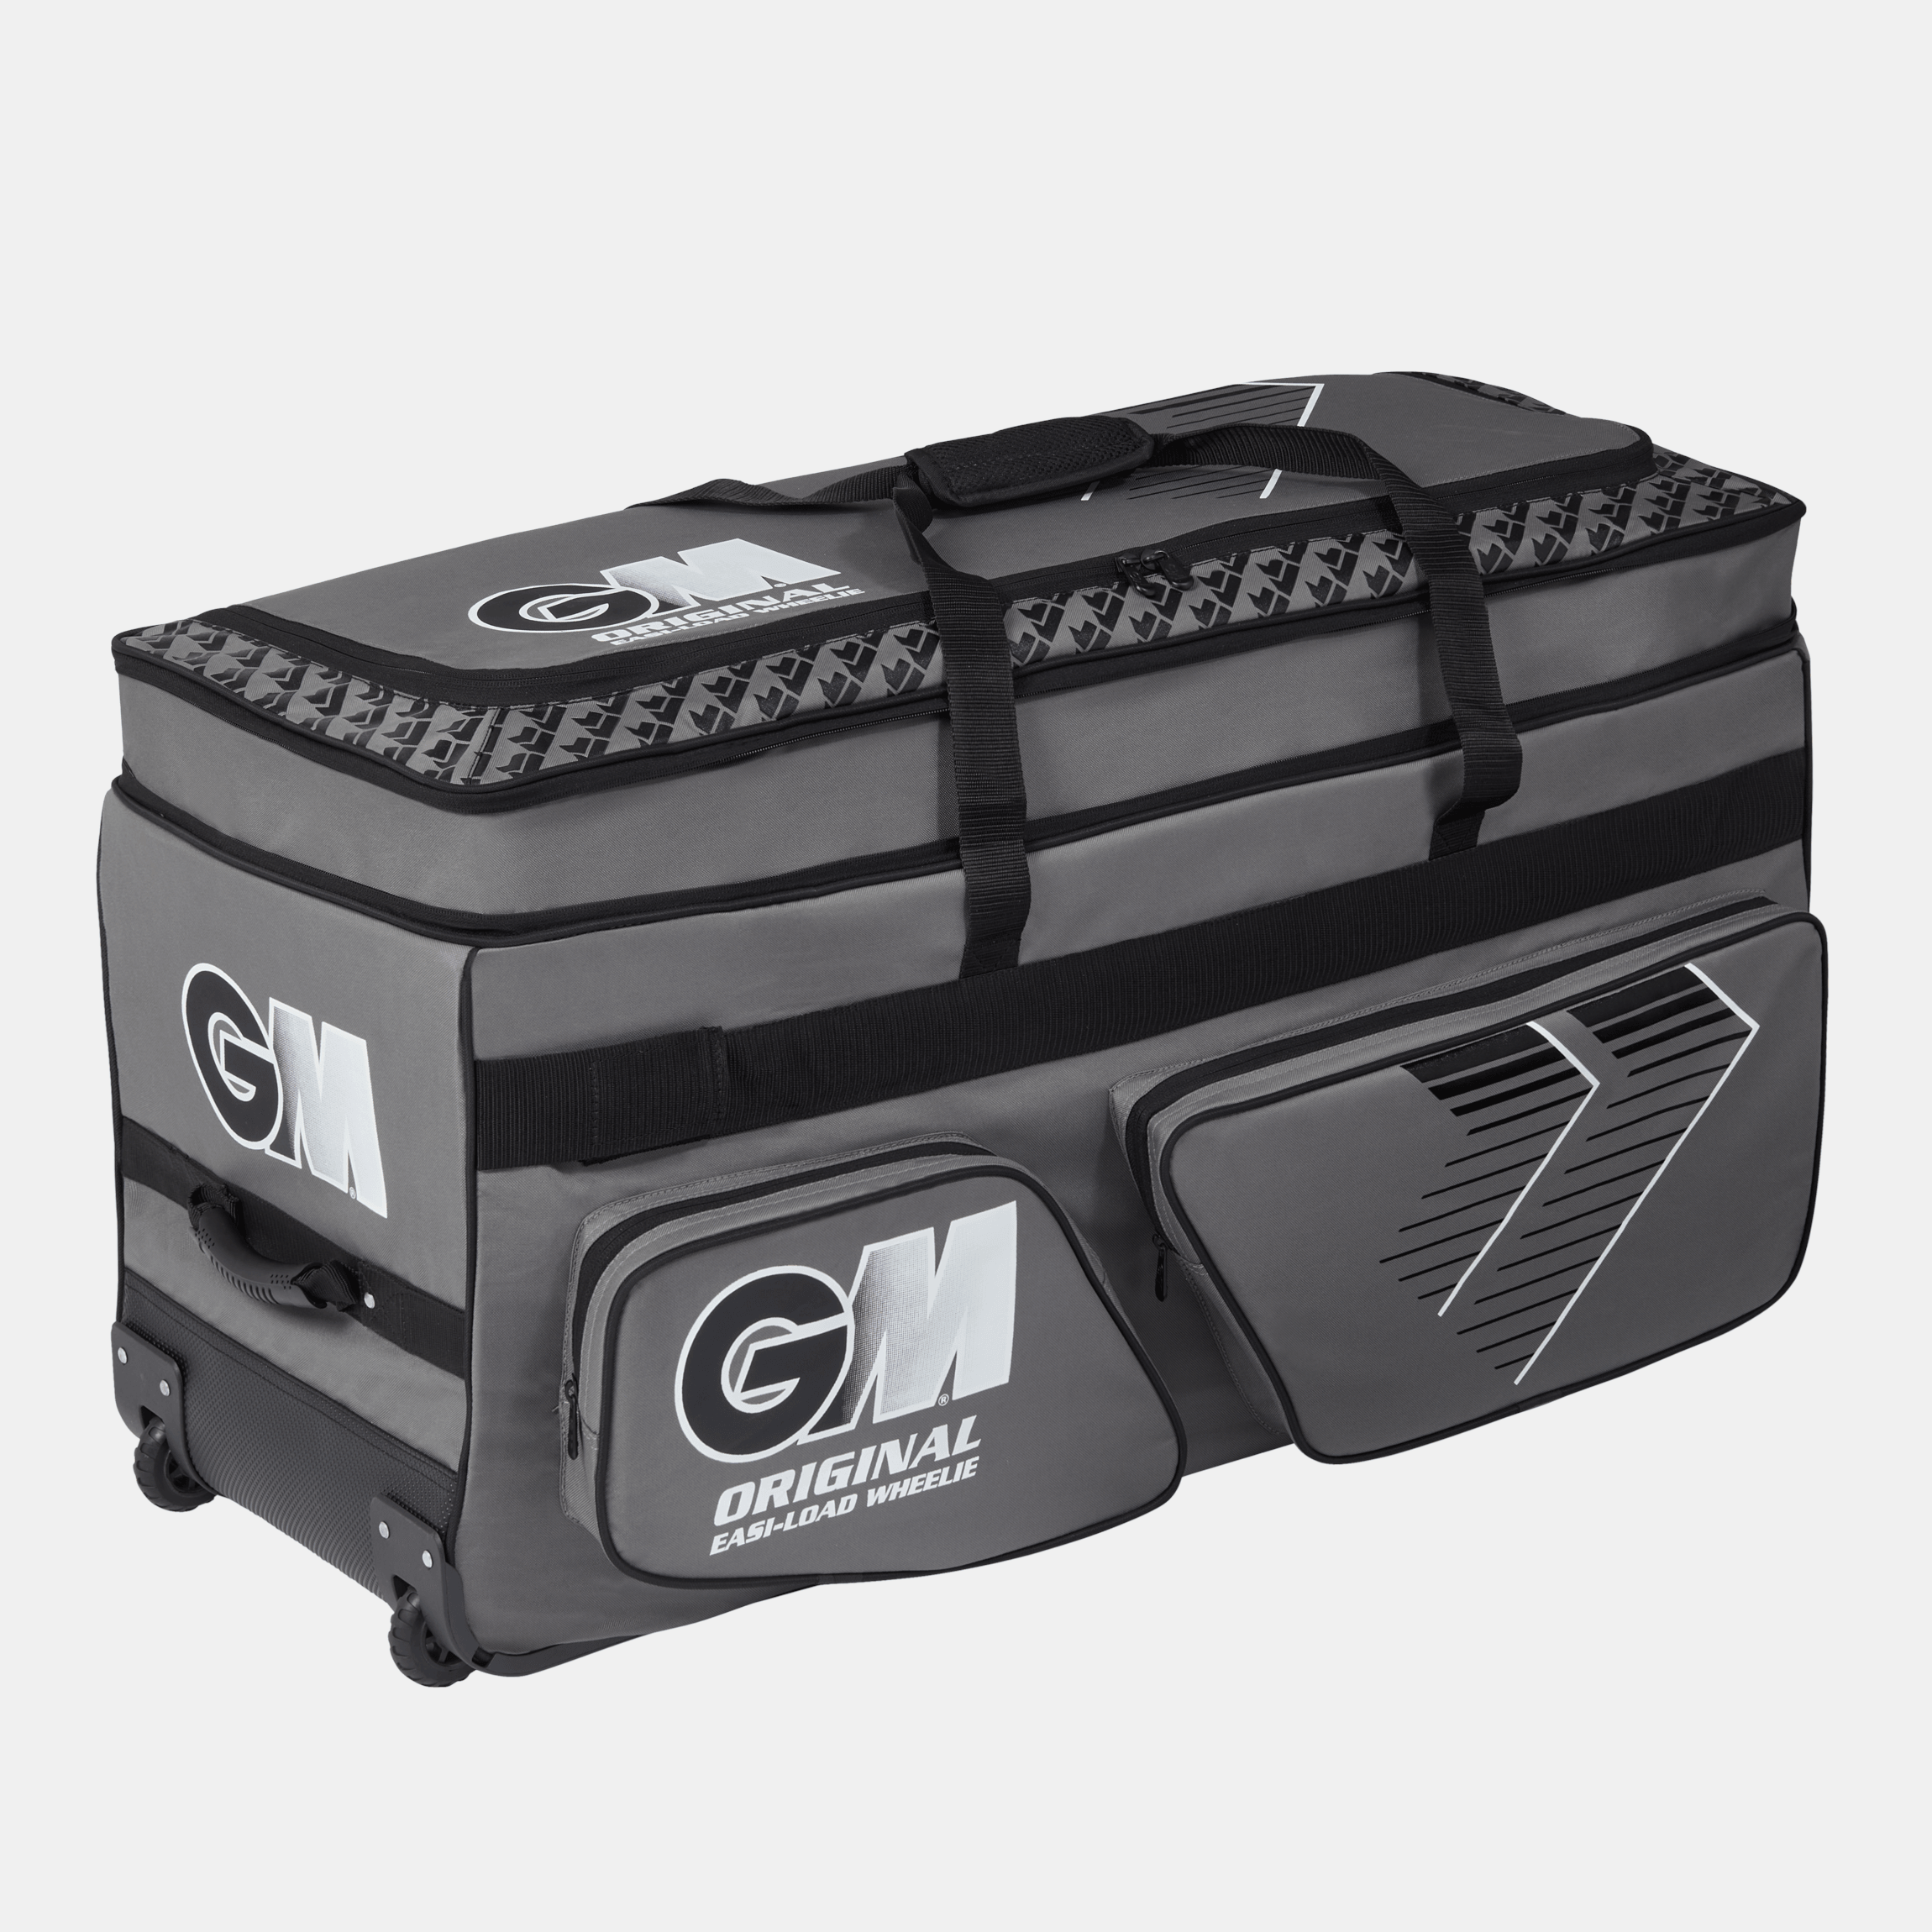 GM Original Easi-Load Cricket Wheelie Kit Bag - AT Sports